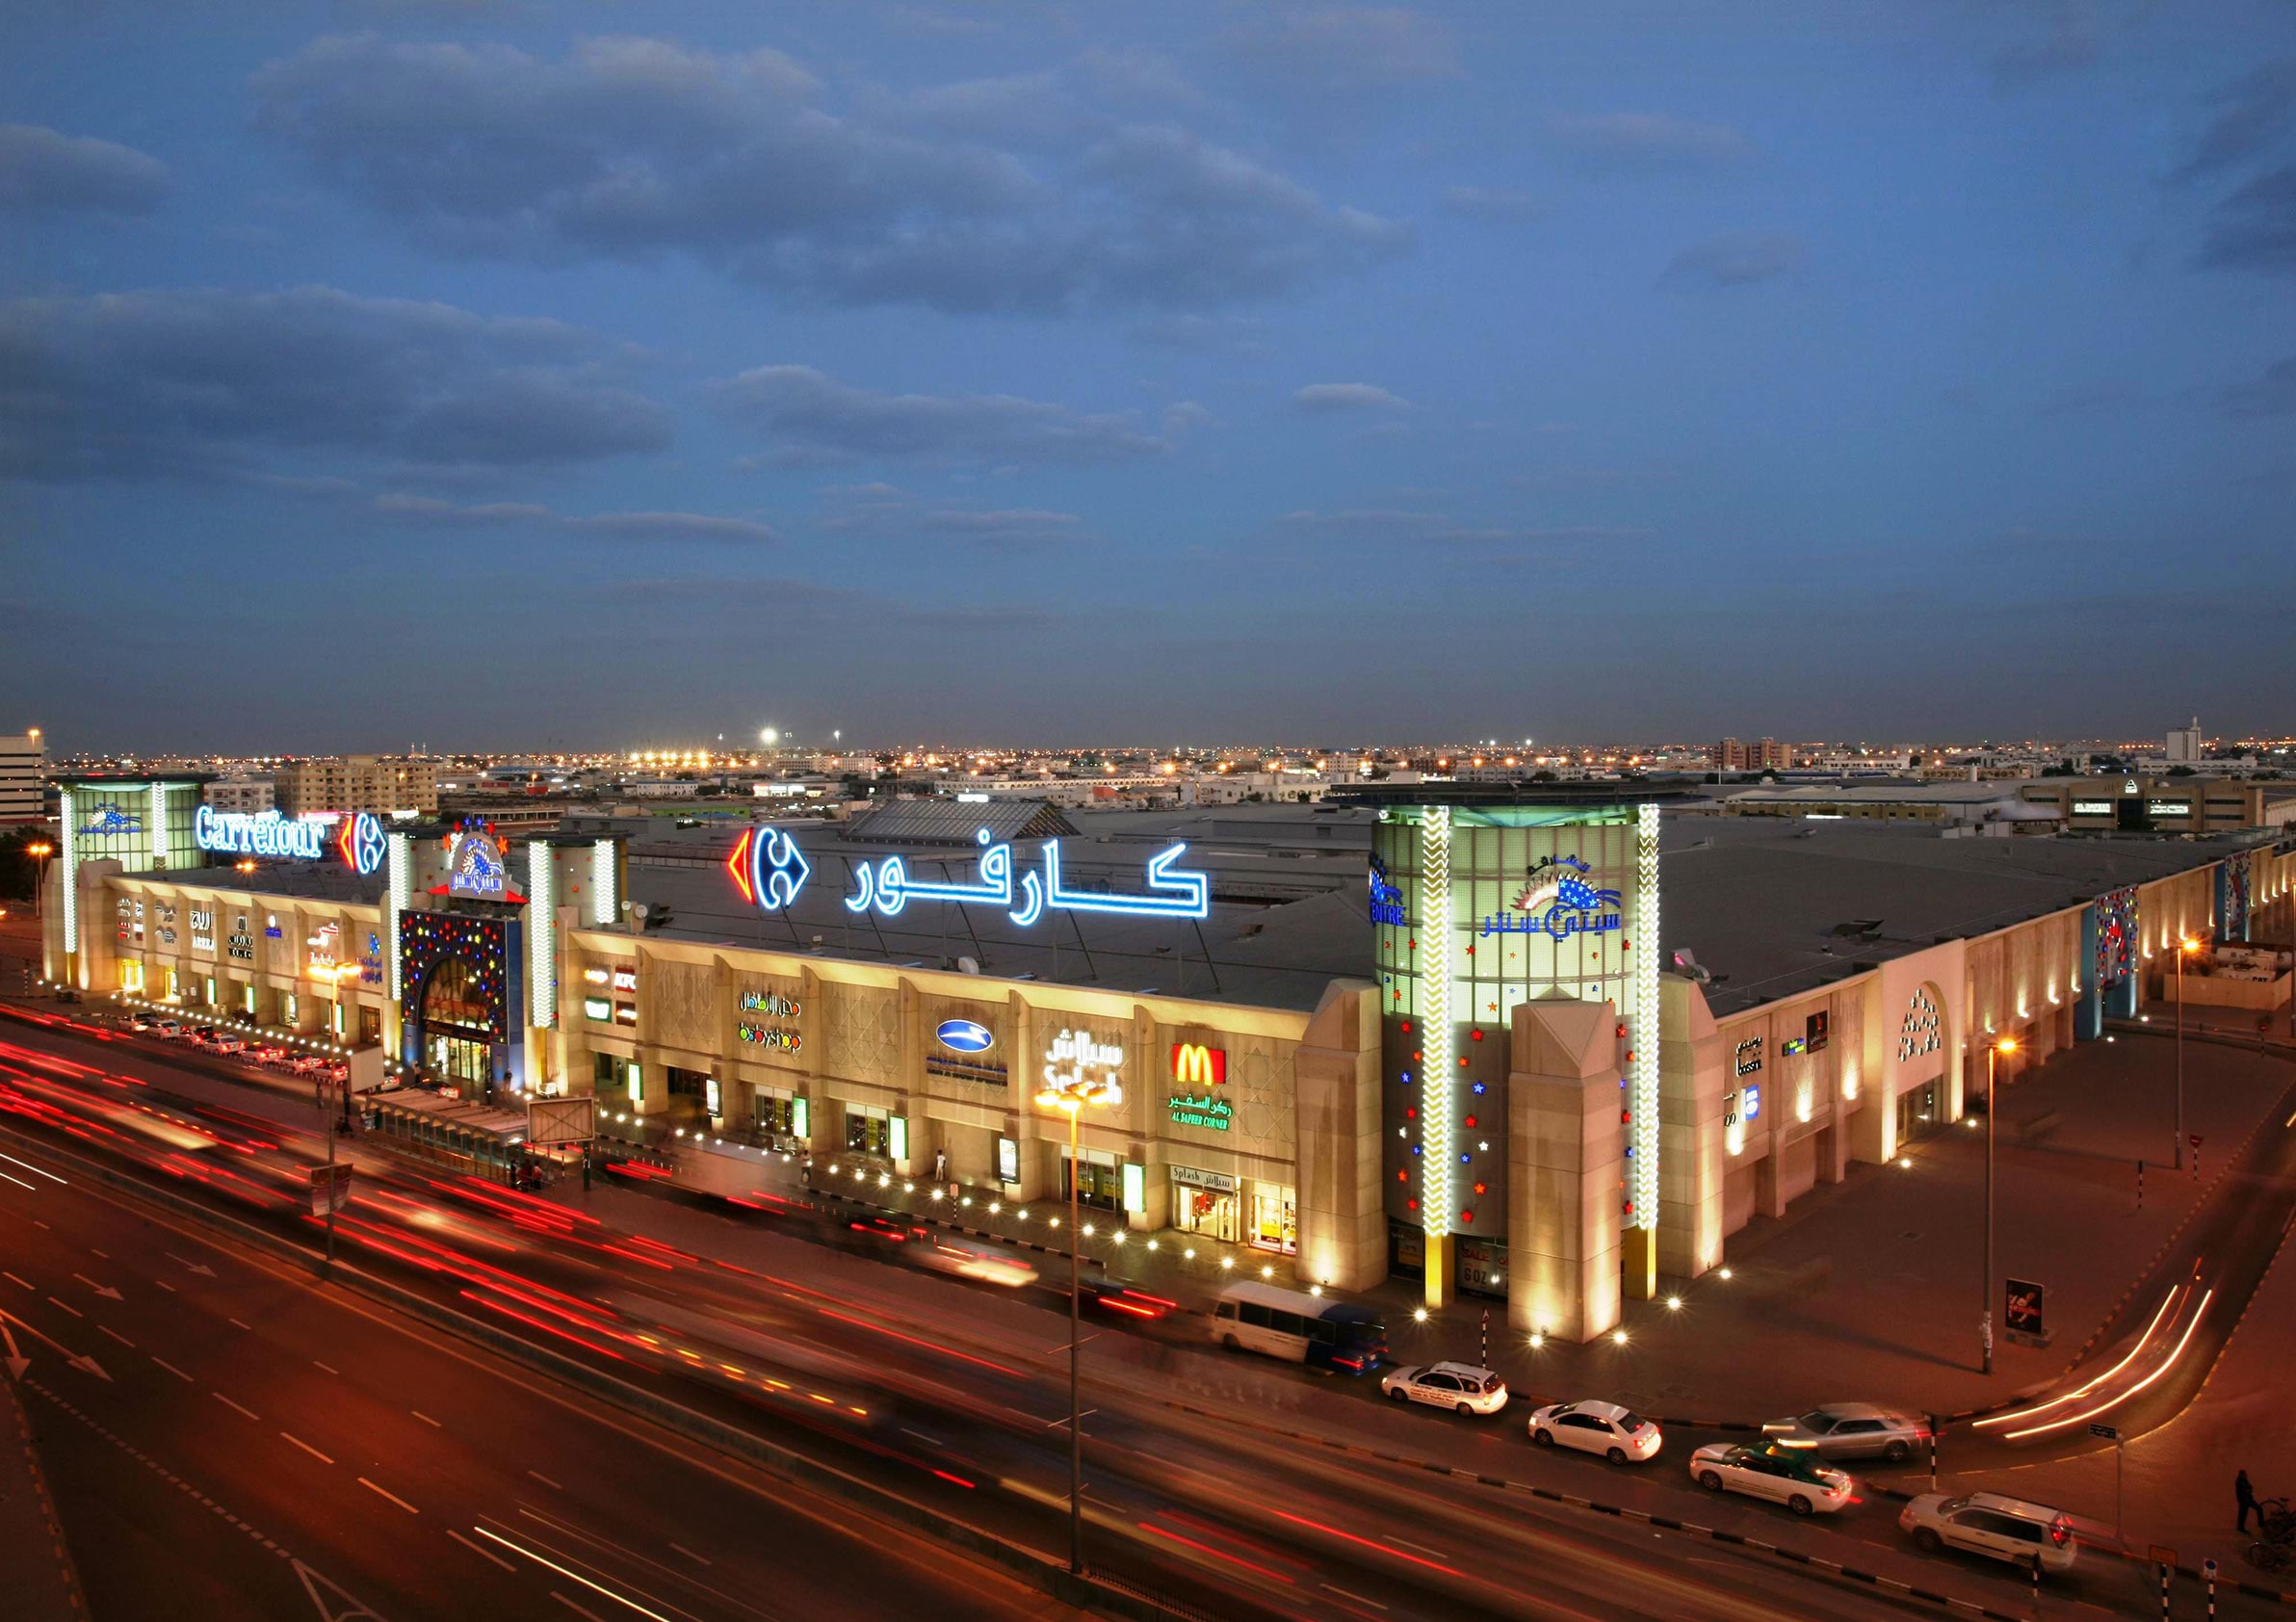 City Centre Sharjah - Revamped to Impress